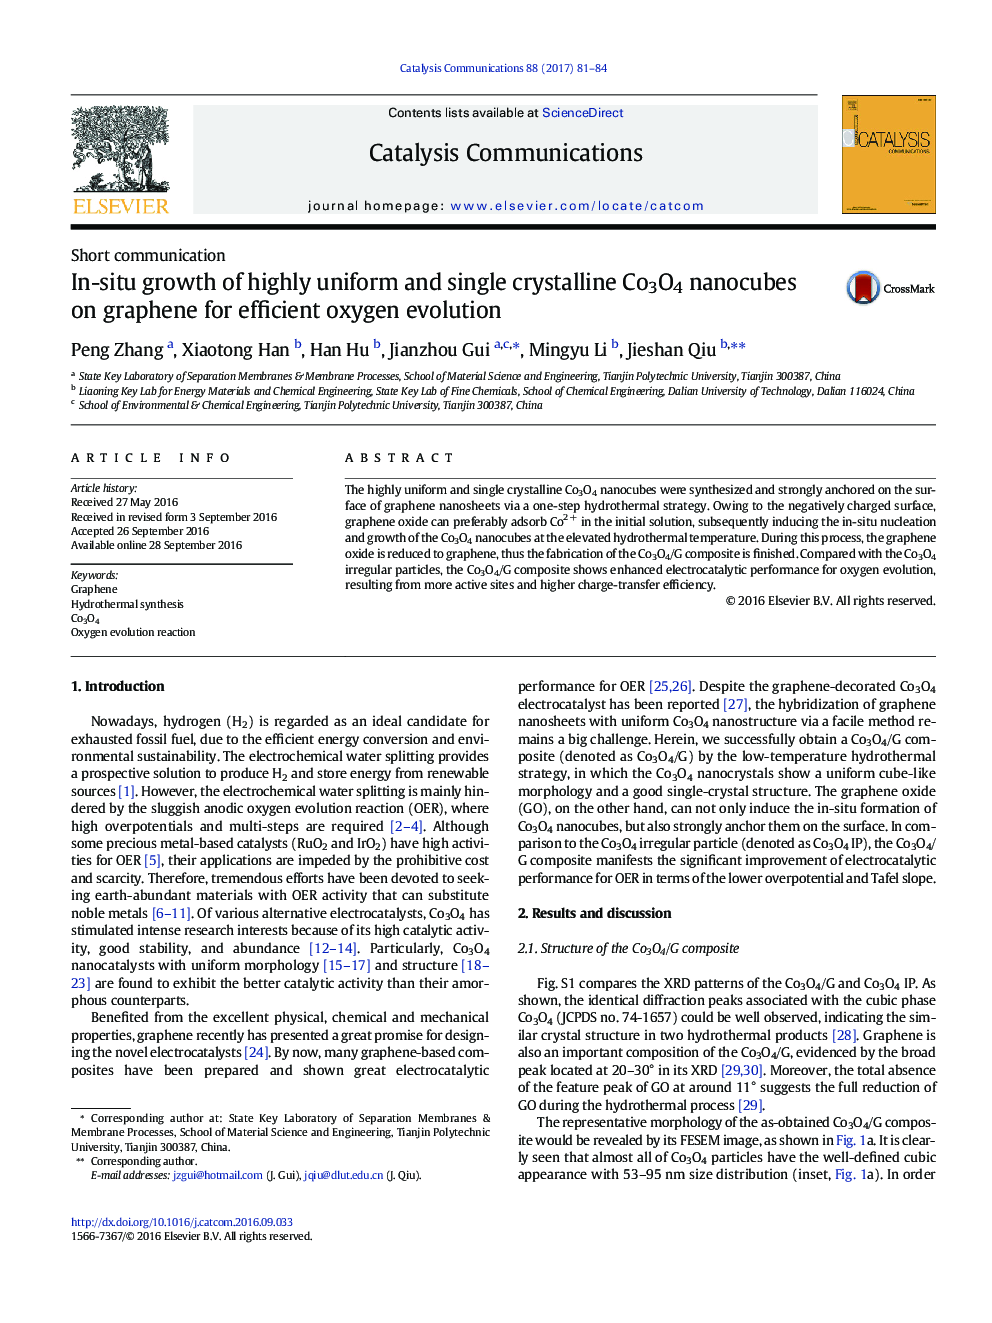 Short communicationIn-situ growth of highly uniform and single crystalline Co3O4 nanocubes on graphene for efficient oxygen evolution